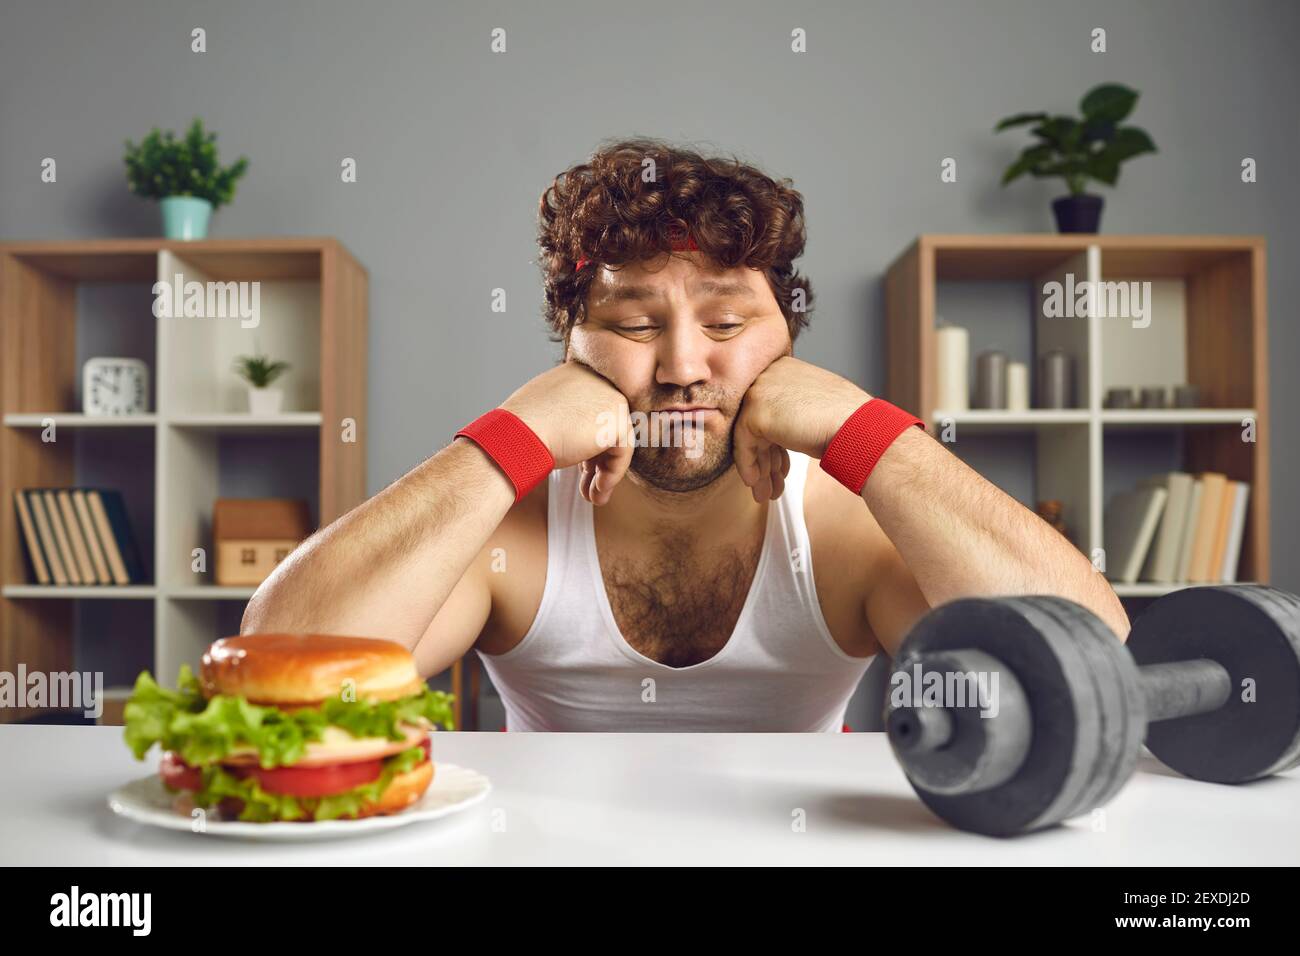 Sad man looking at tempting burger and dumbbell choosing between food and training Stock Photo